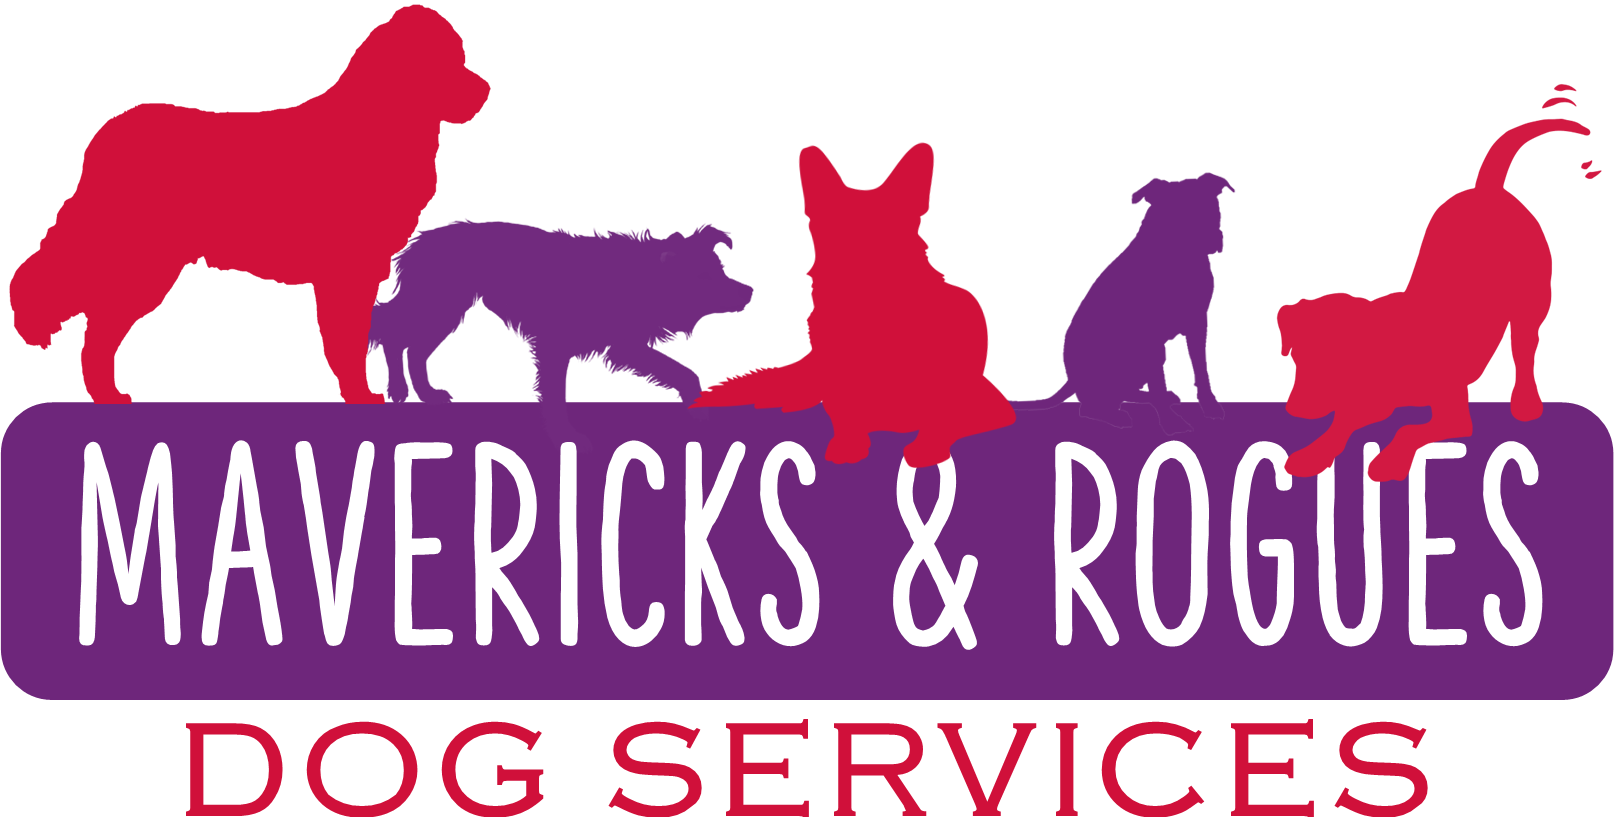 Mavericks & Rogues Dog Services